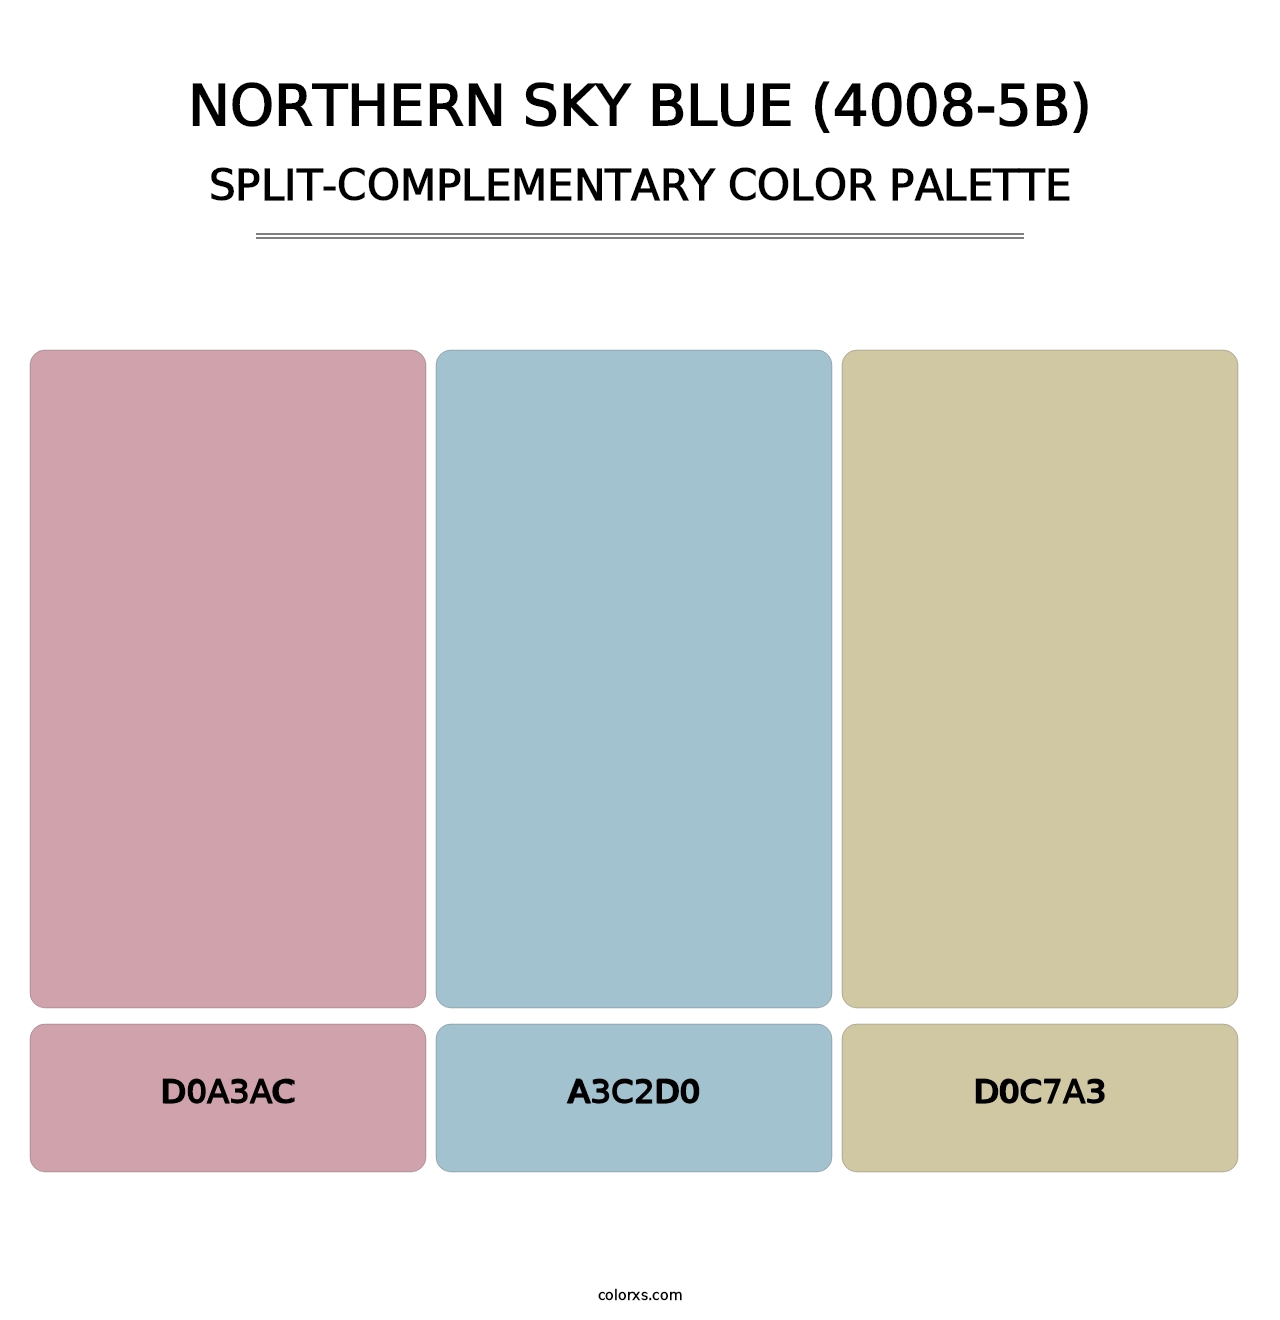 Northern Sky Blue (4008-5B) - Split-Complementary Color Palette